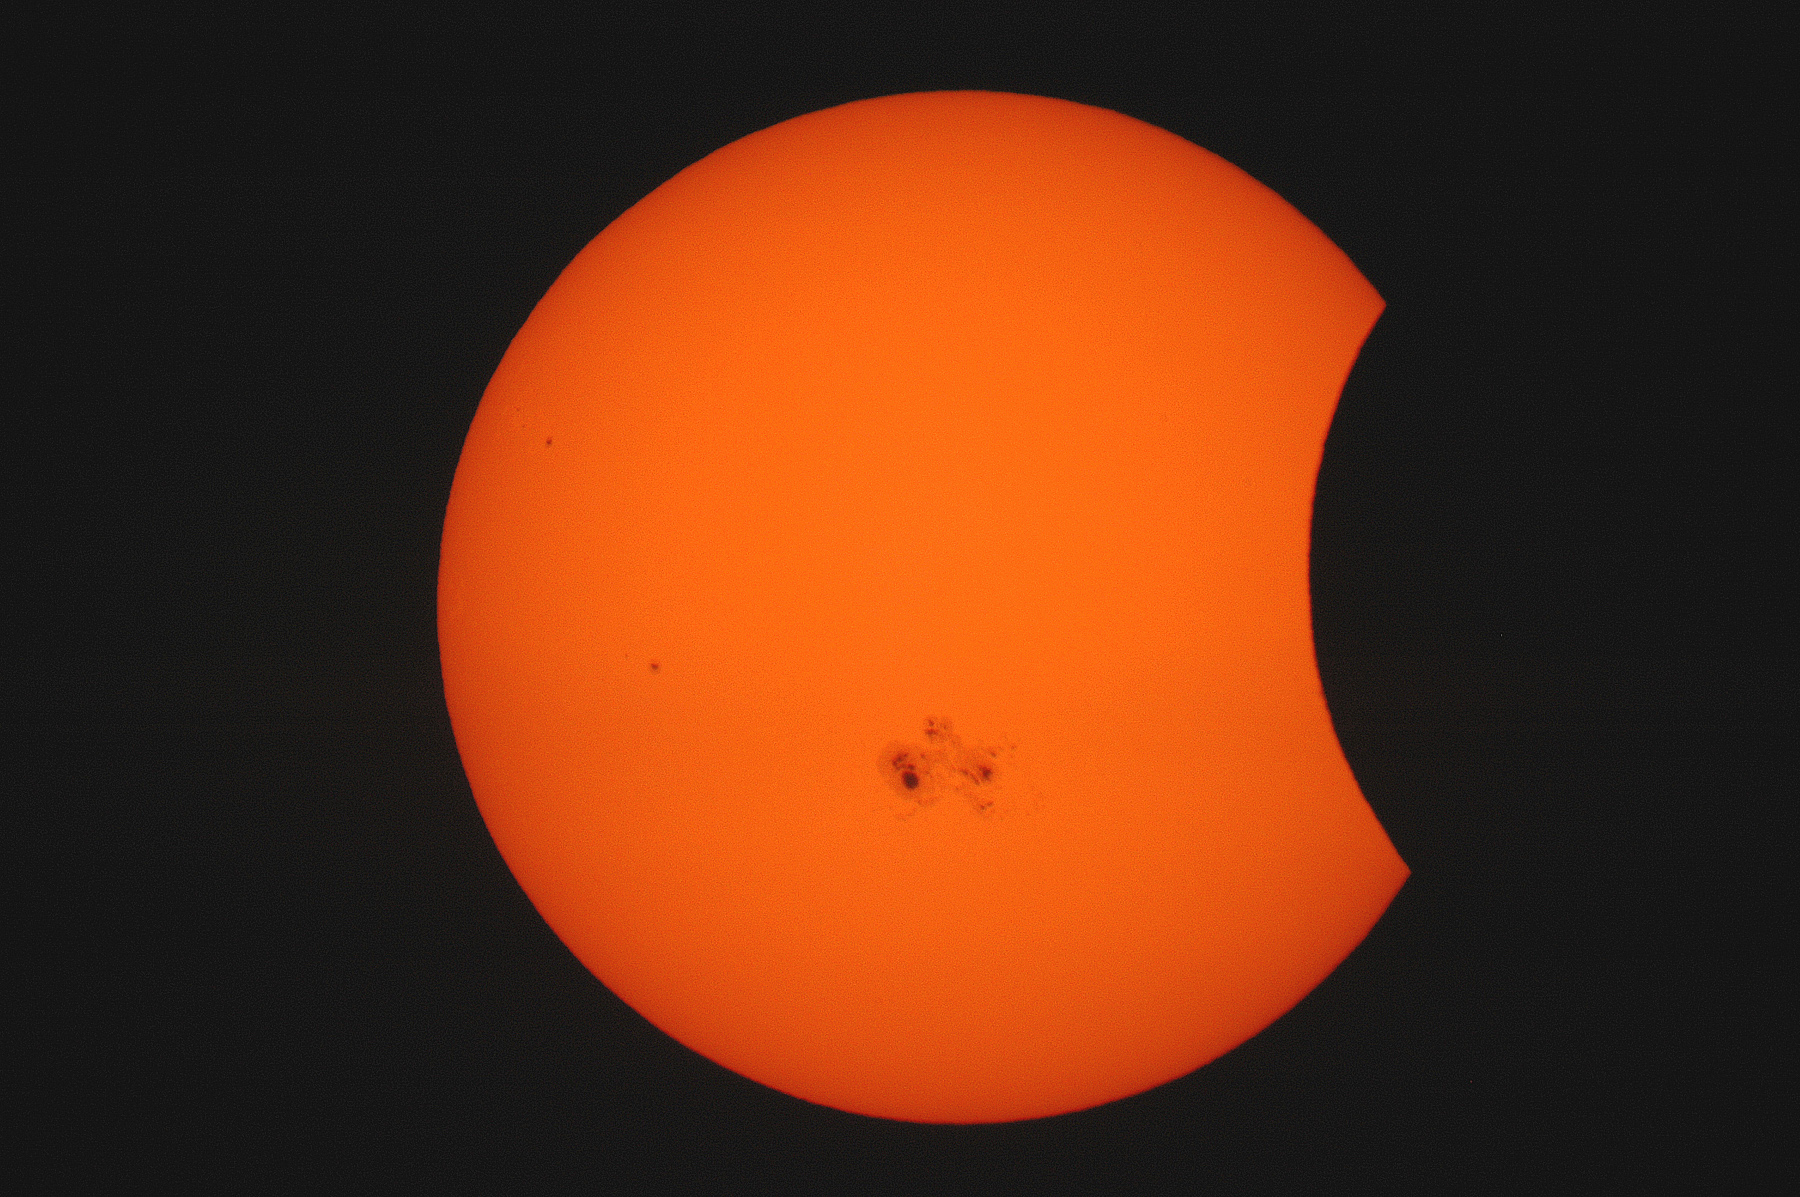 Eclipse 2014 - A18 - 5-52 p.m. - 8695